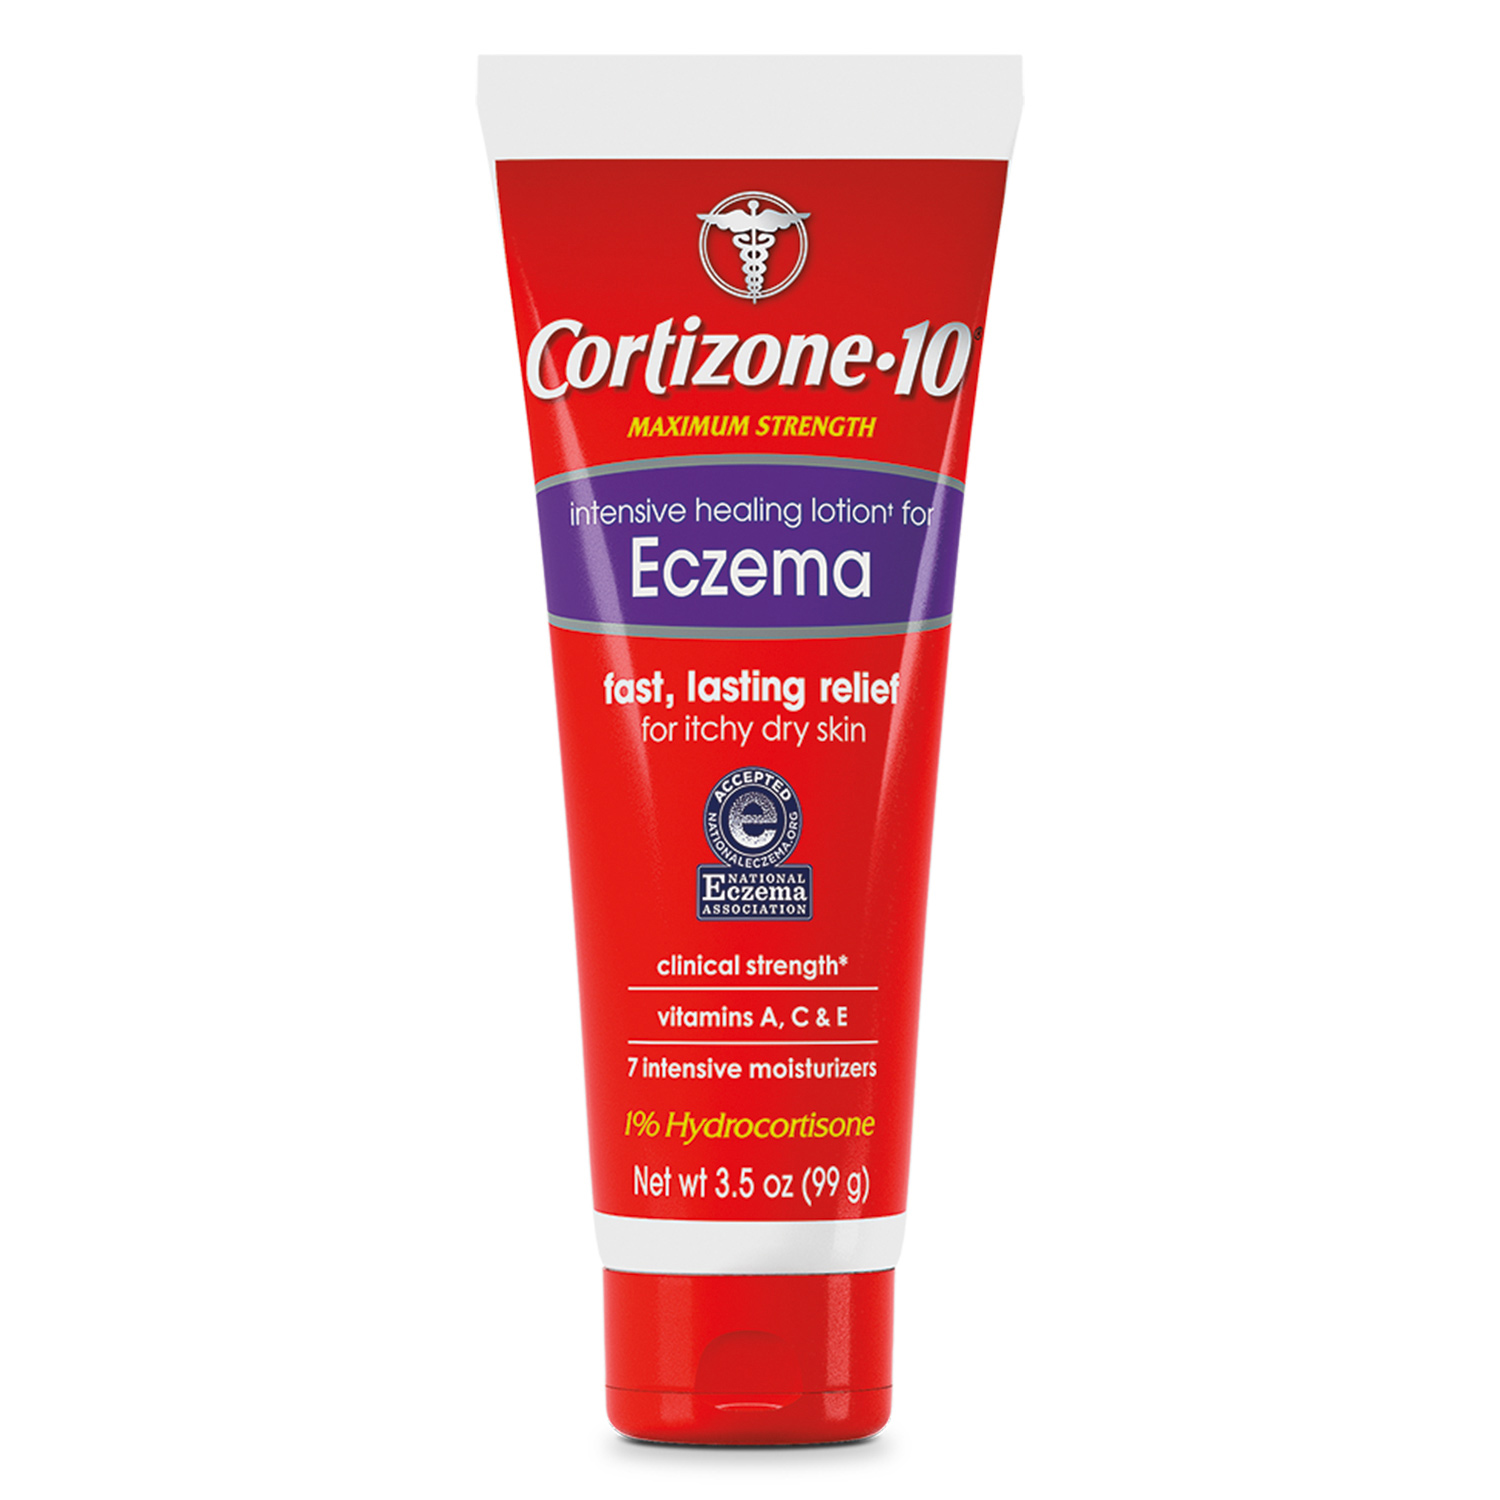 Cortizone-10 1% Hydrocortisone Anti Itch Cream for Eczema and Bug Bite Relief, Maximum Strength, 3.5 oz - image 2 of 9